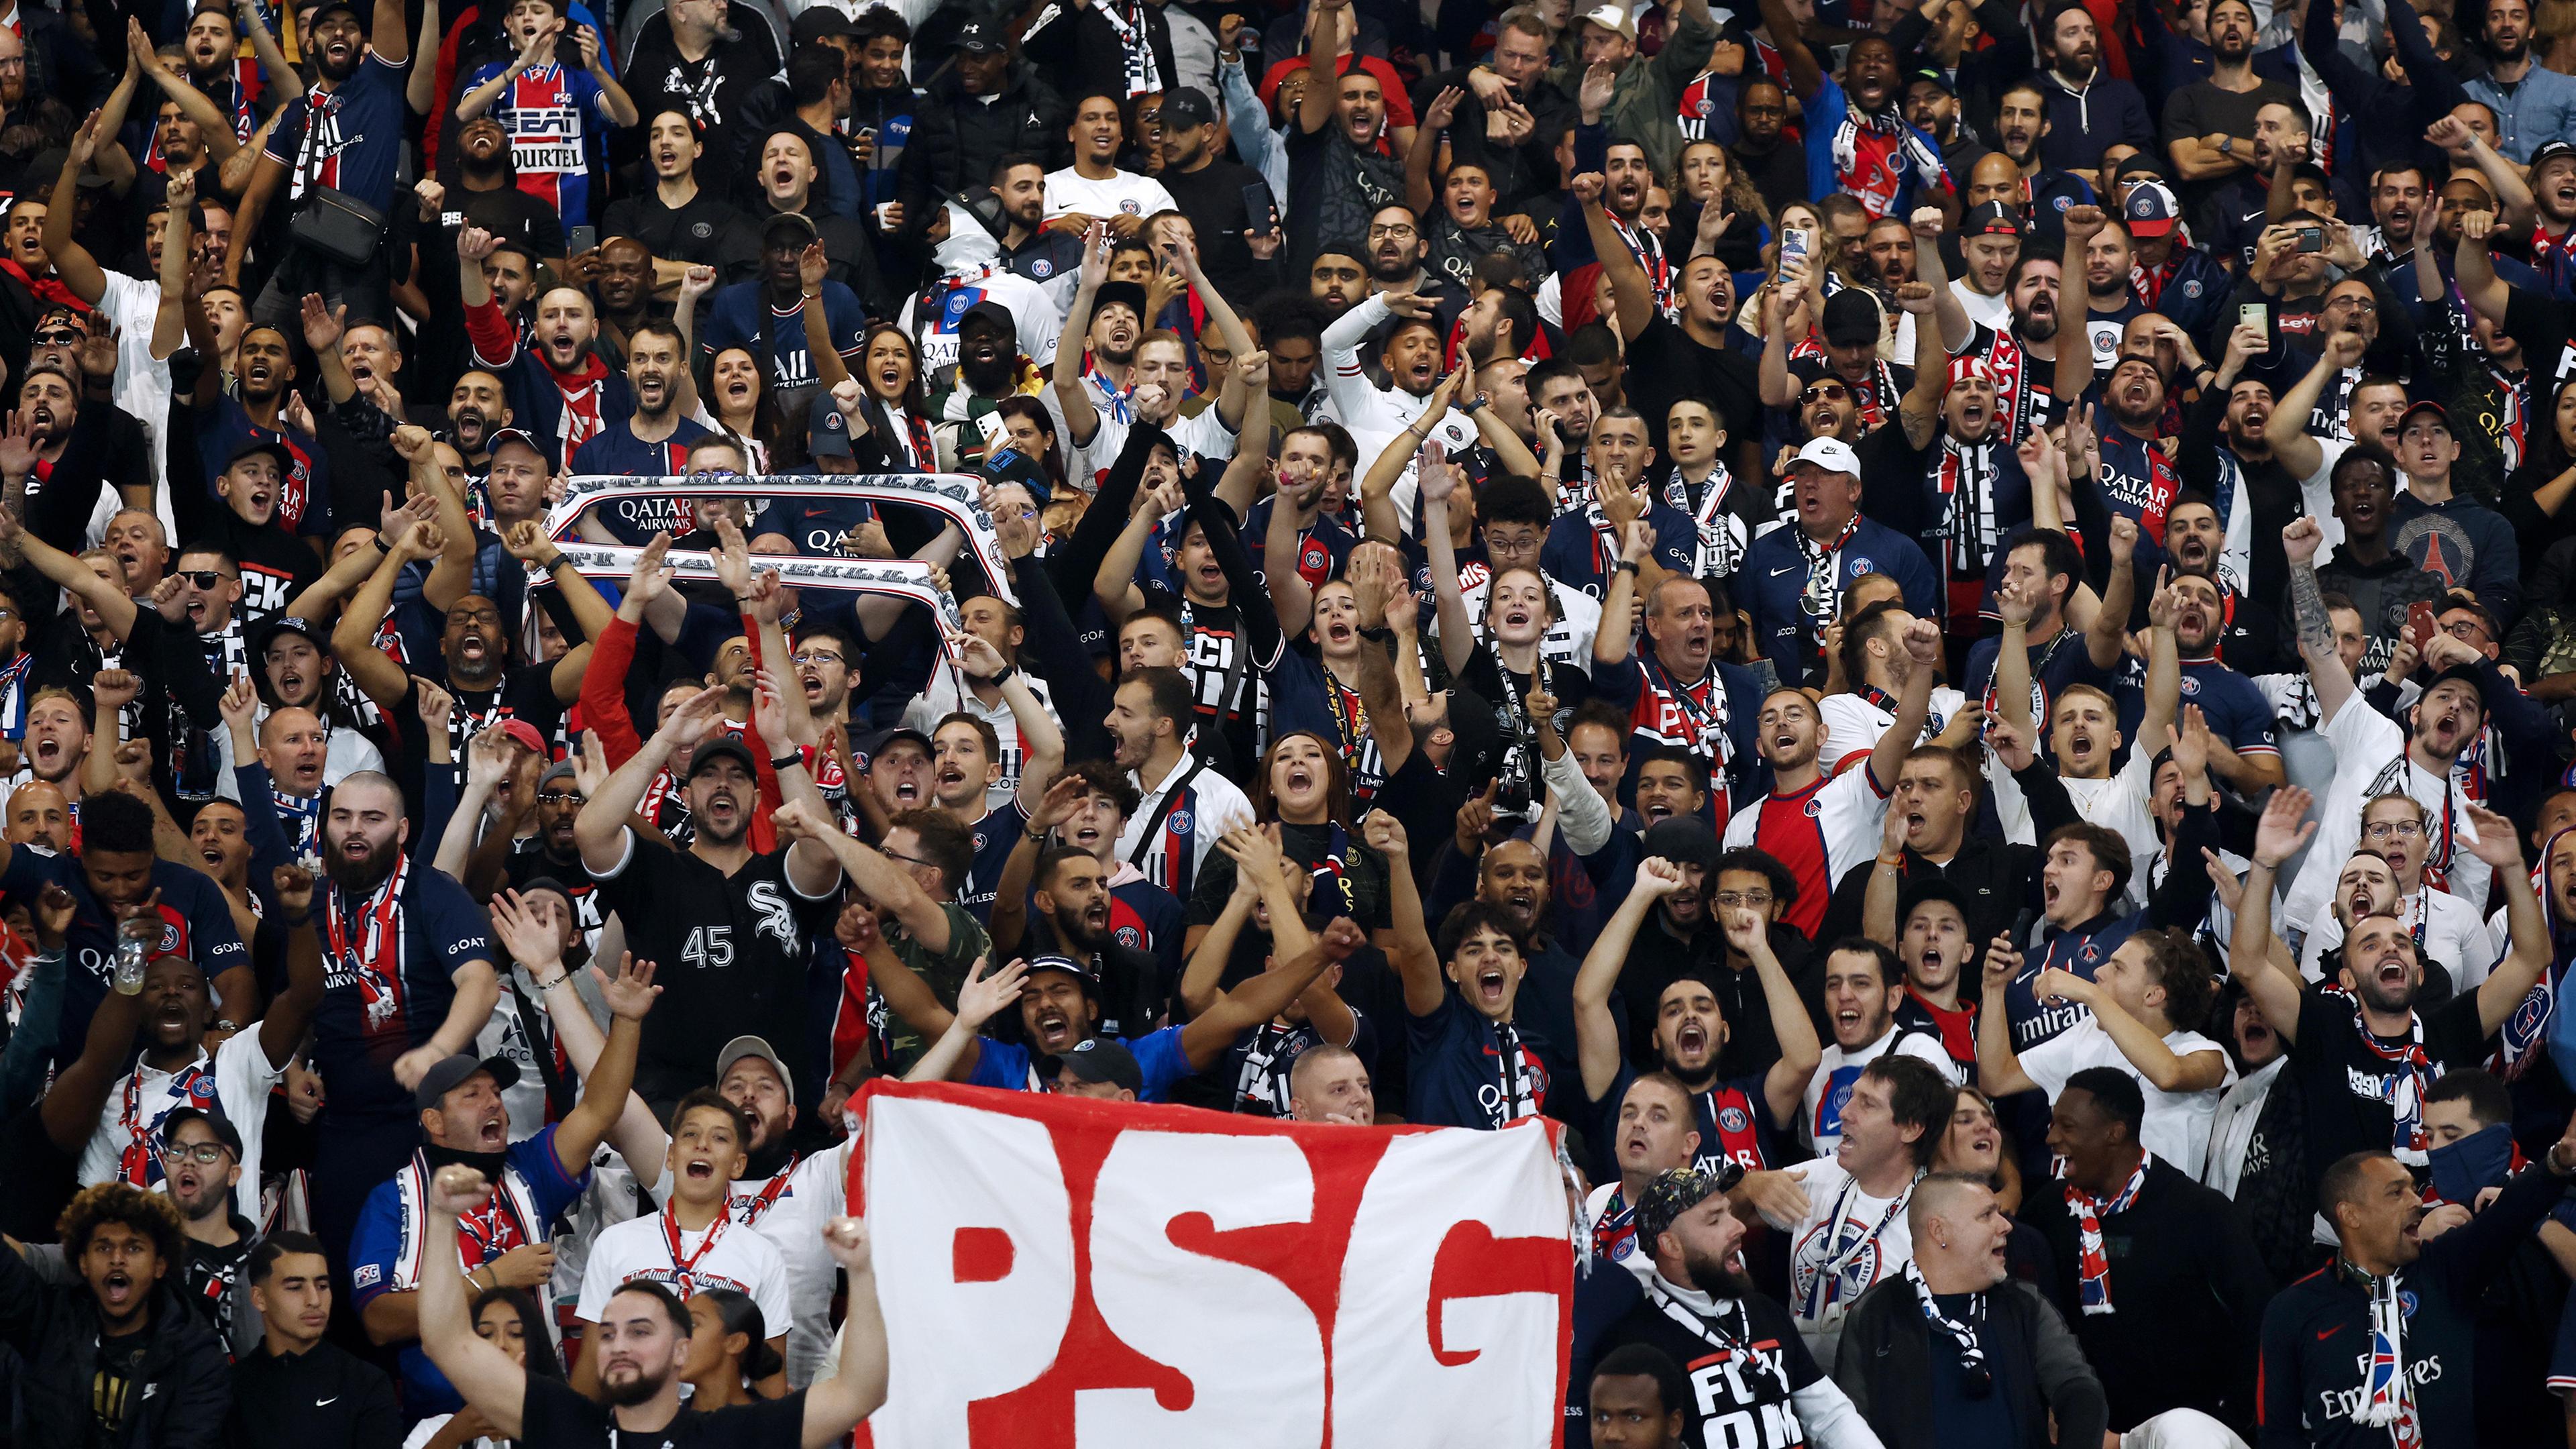 Pariser Fans beim Spiel Paris Saint-Germain - Olympique Marseille